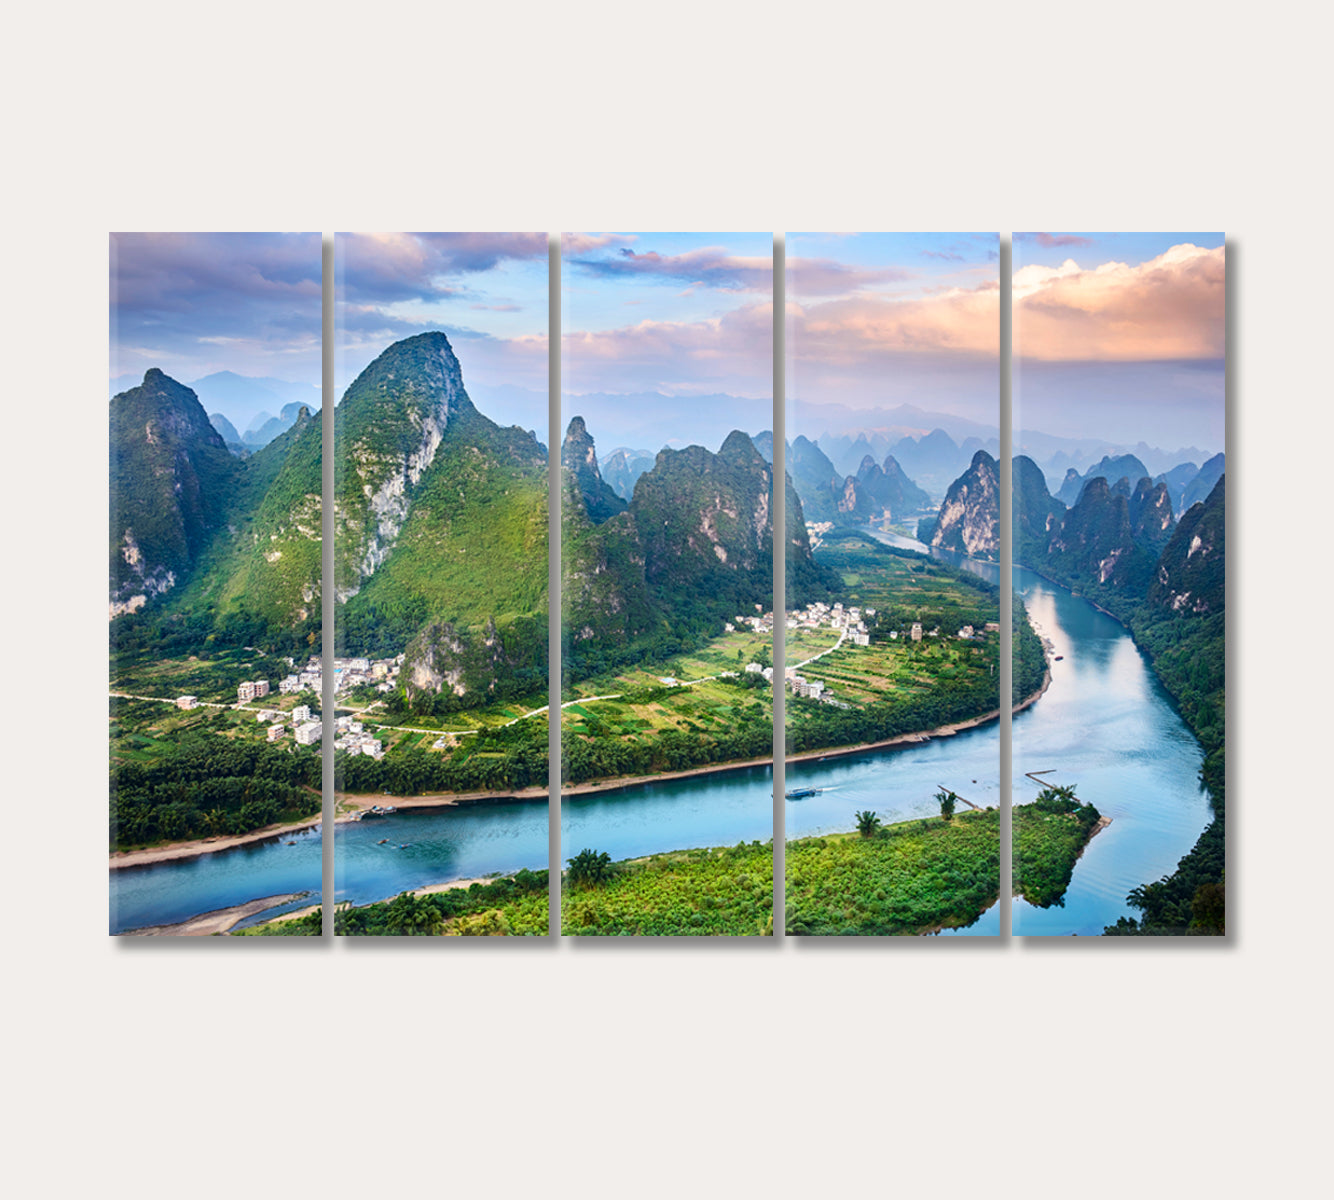 Landscape Li River and Karst Mountains China Canvas Print-Canvas Print-CetArt-5 Panels-36x24 inches-CetArt